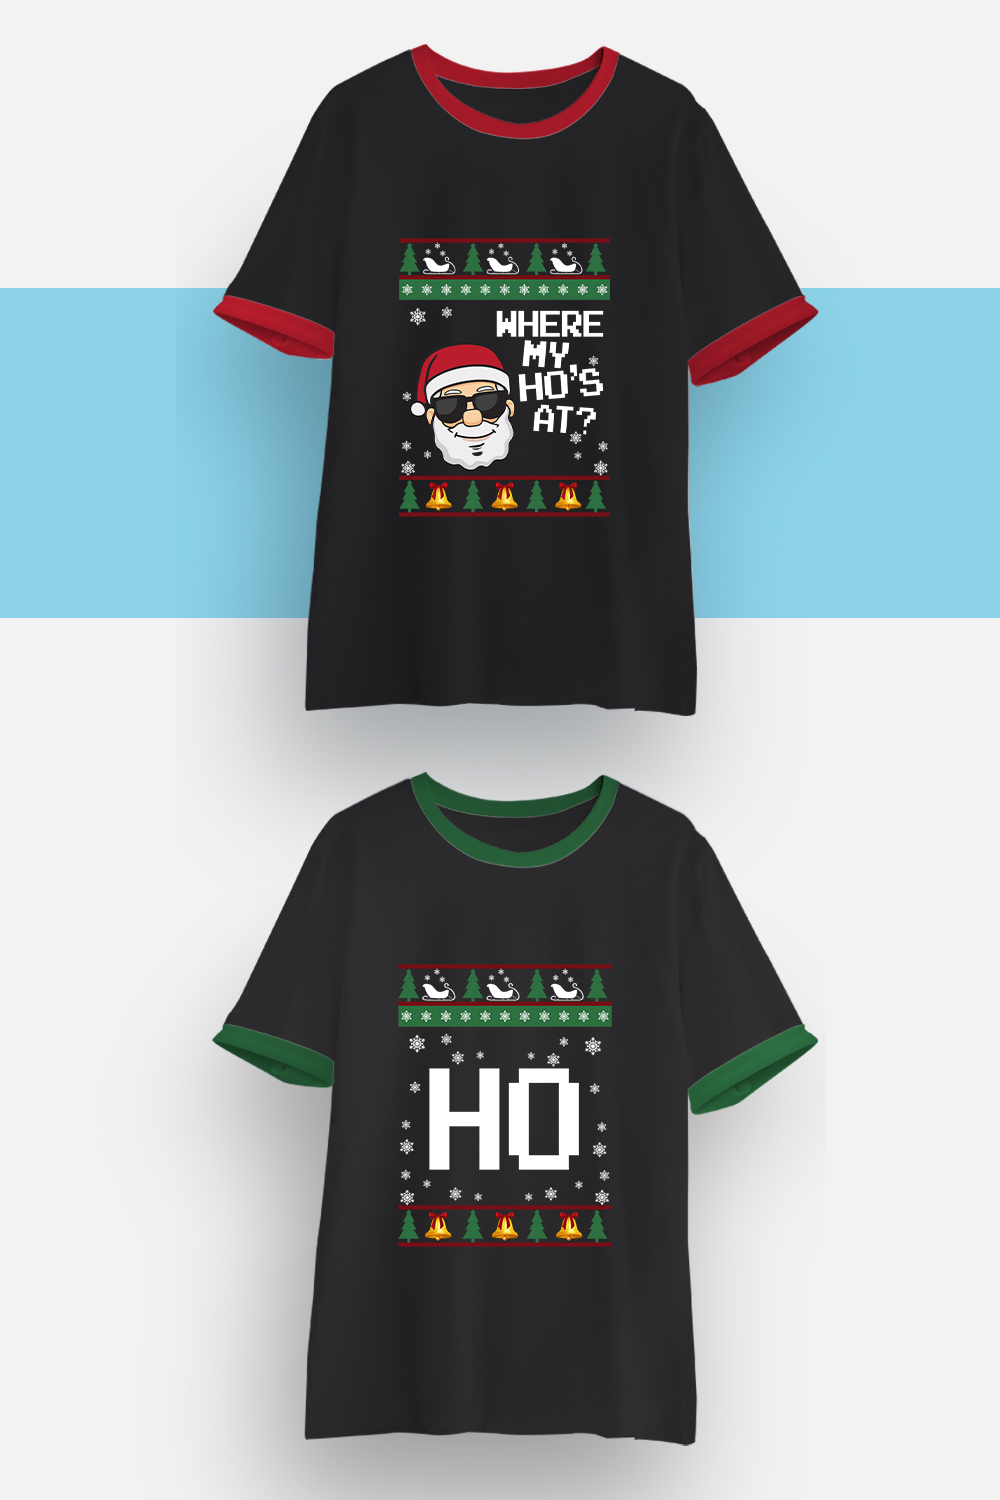 Where My Ho's At Santa Christmas T-Shirt Design Pinterest image.